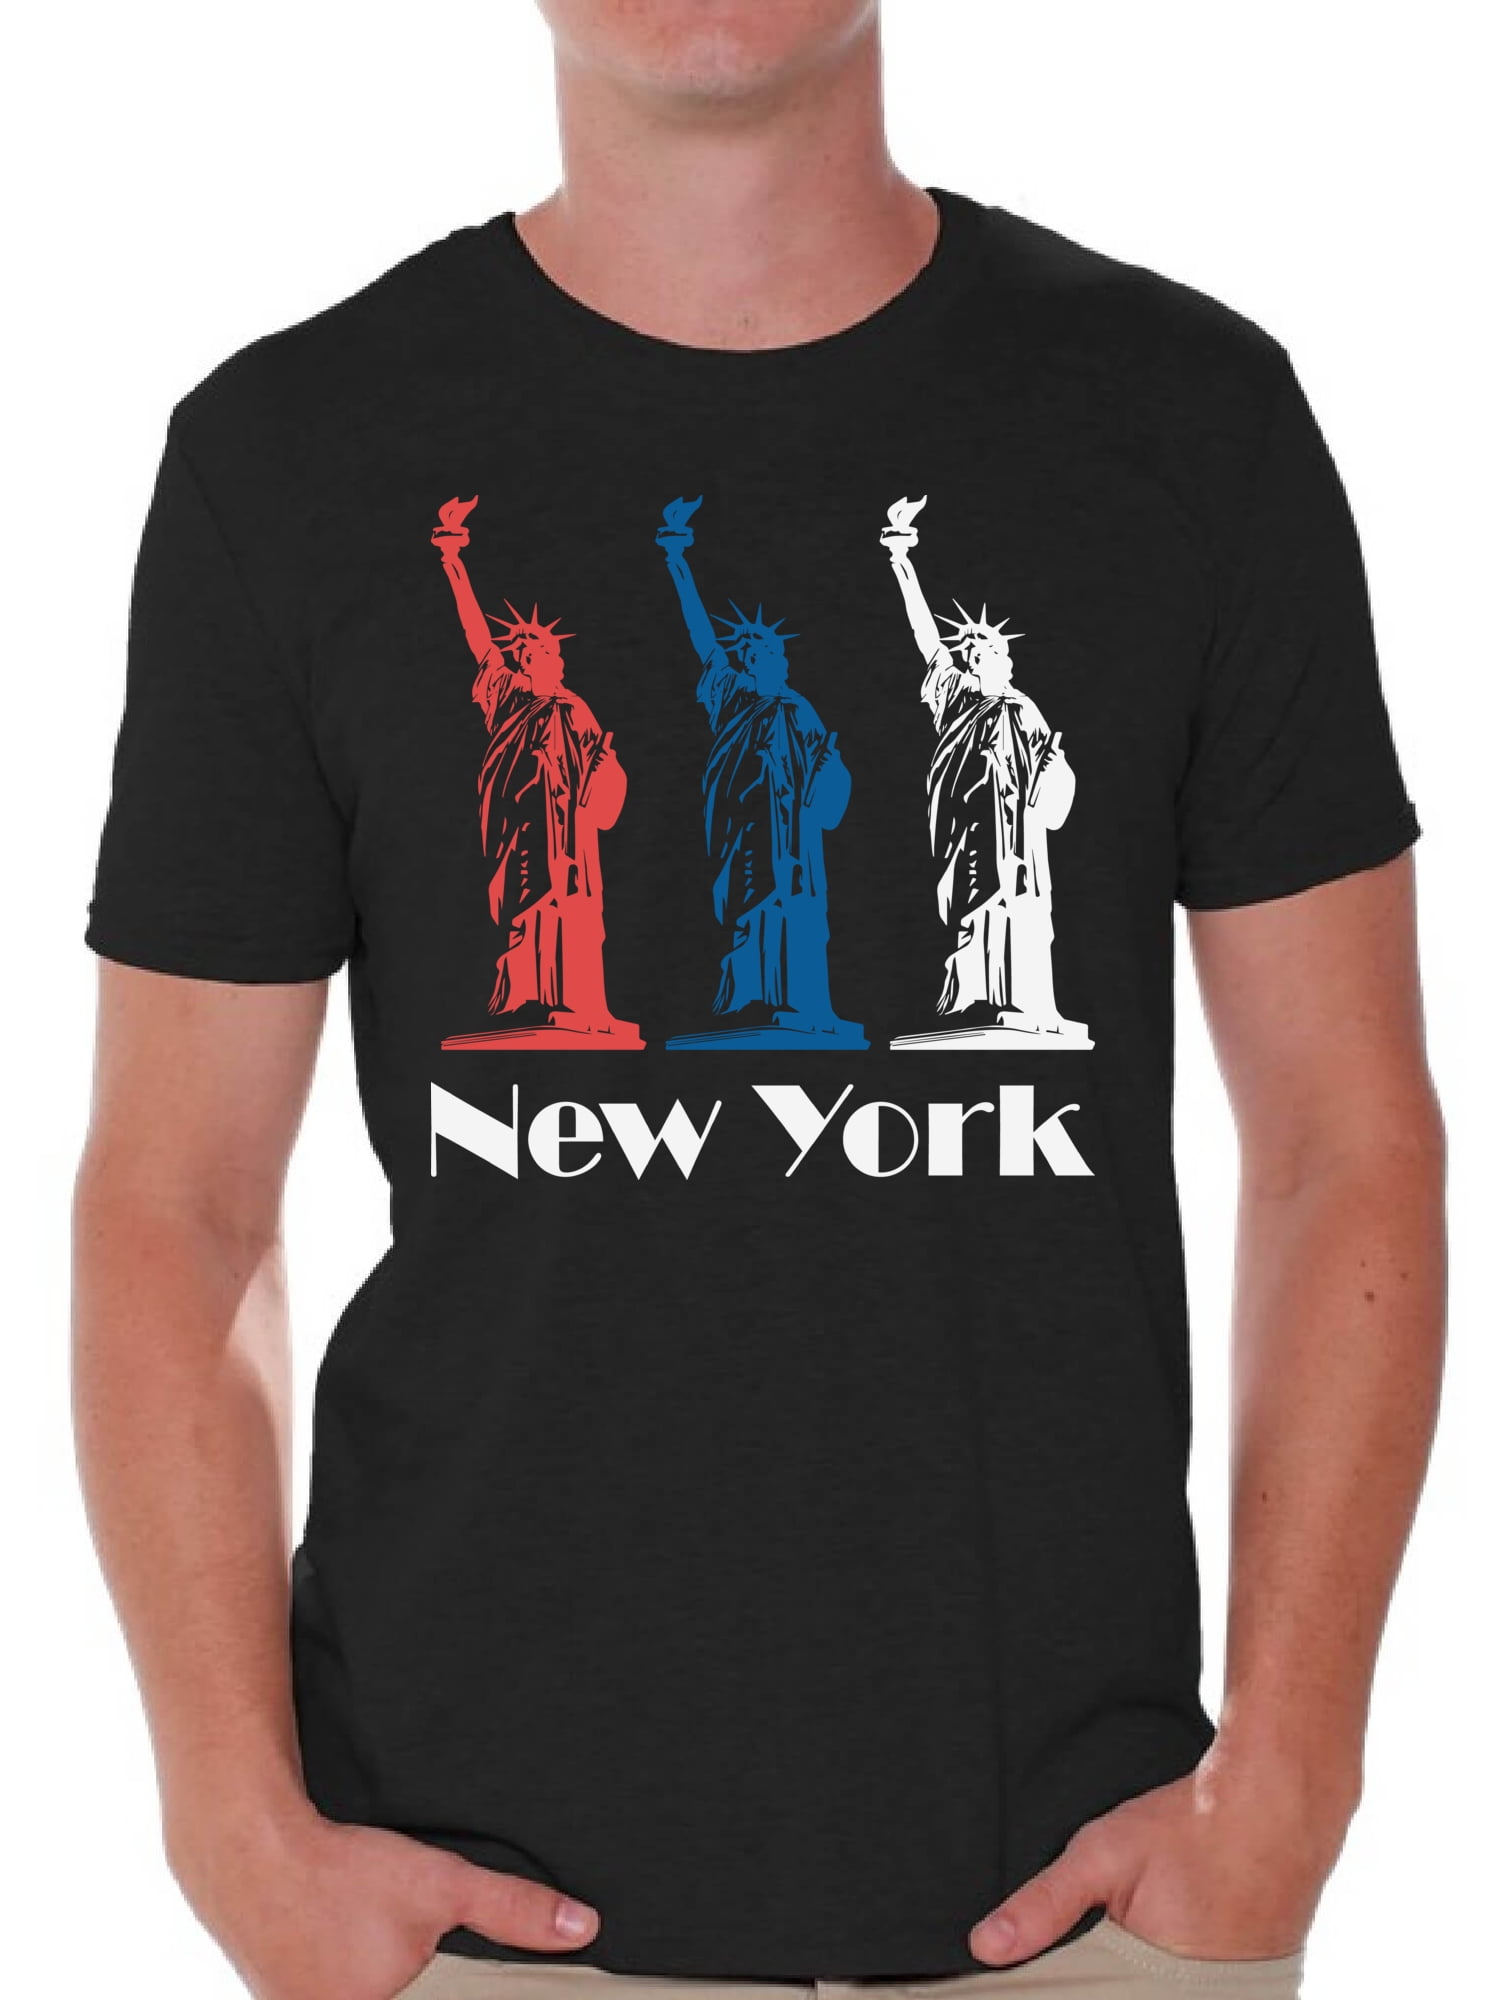 MENS NEW YORK T-SHIRT CITY TRAVEL USA TEE SIZE S-XXL GIFT STREETWEAR 